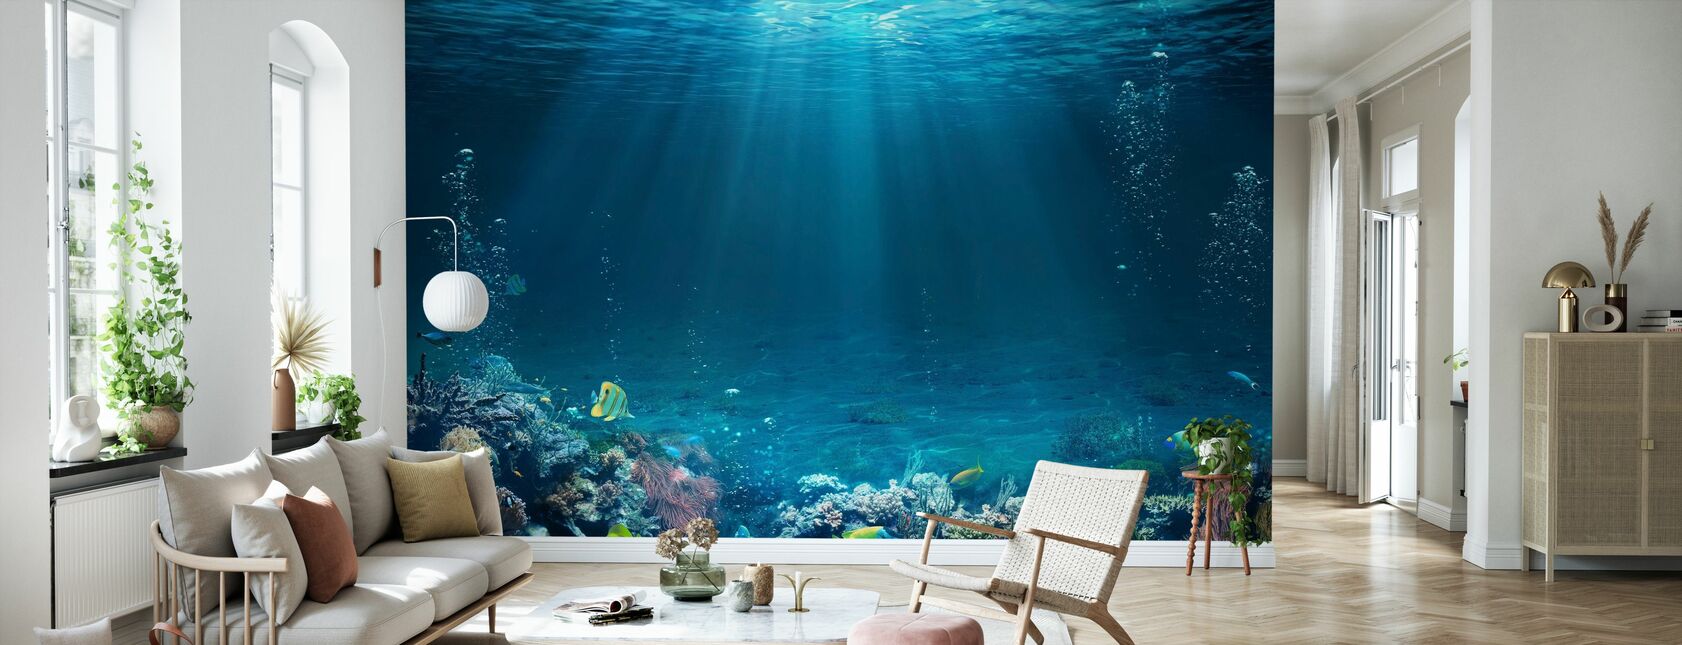 Underwater Scene - Wallpaper - Living Room